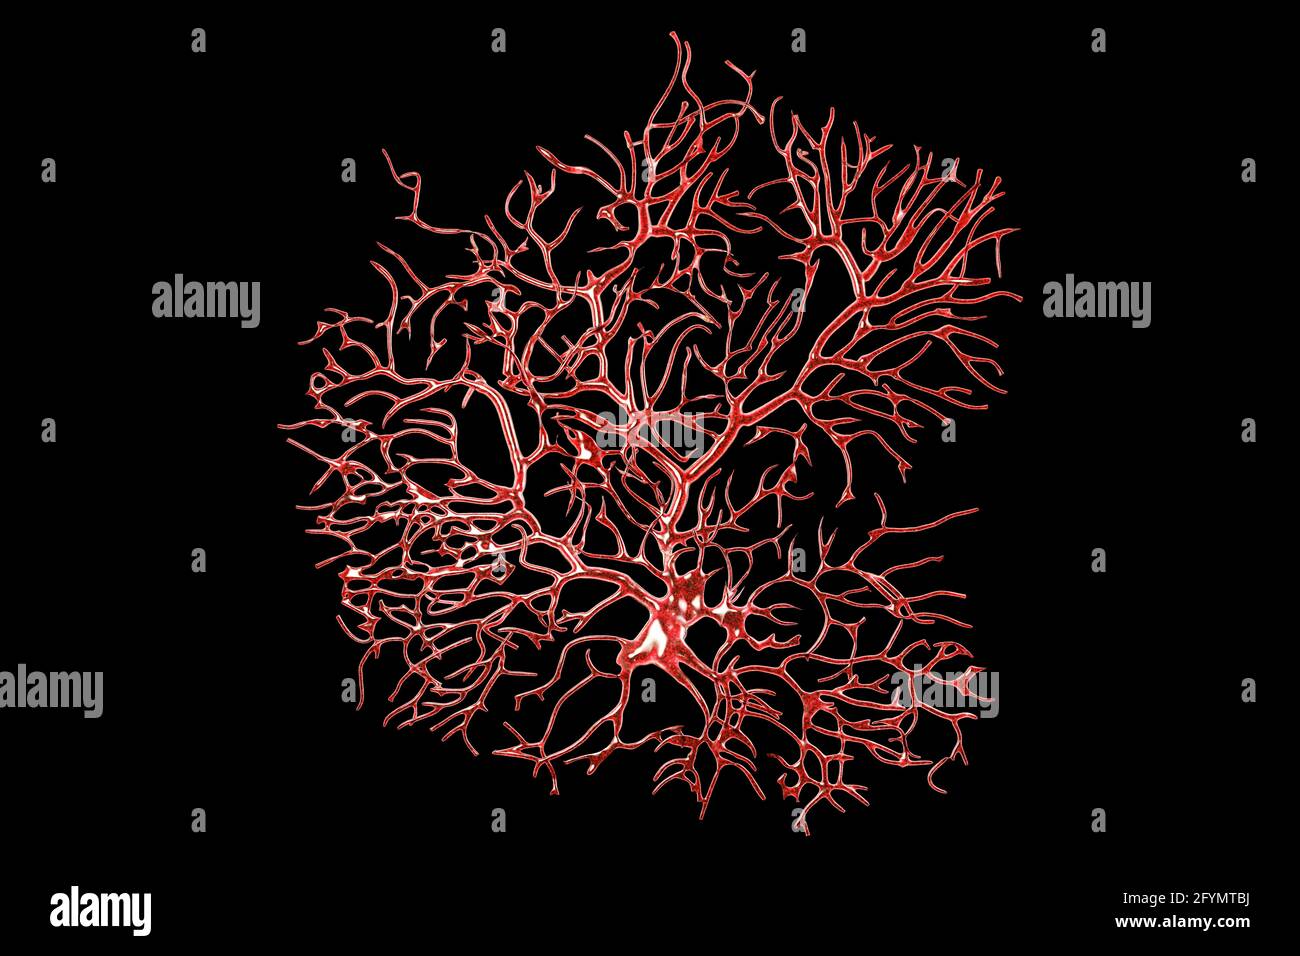 Purkinje nerve cells, illustration Stock Photo